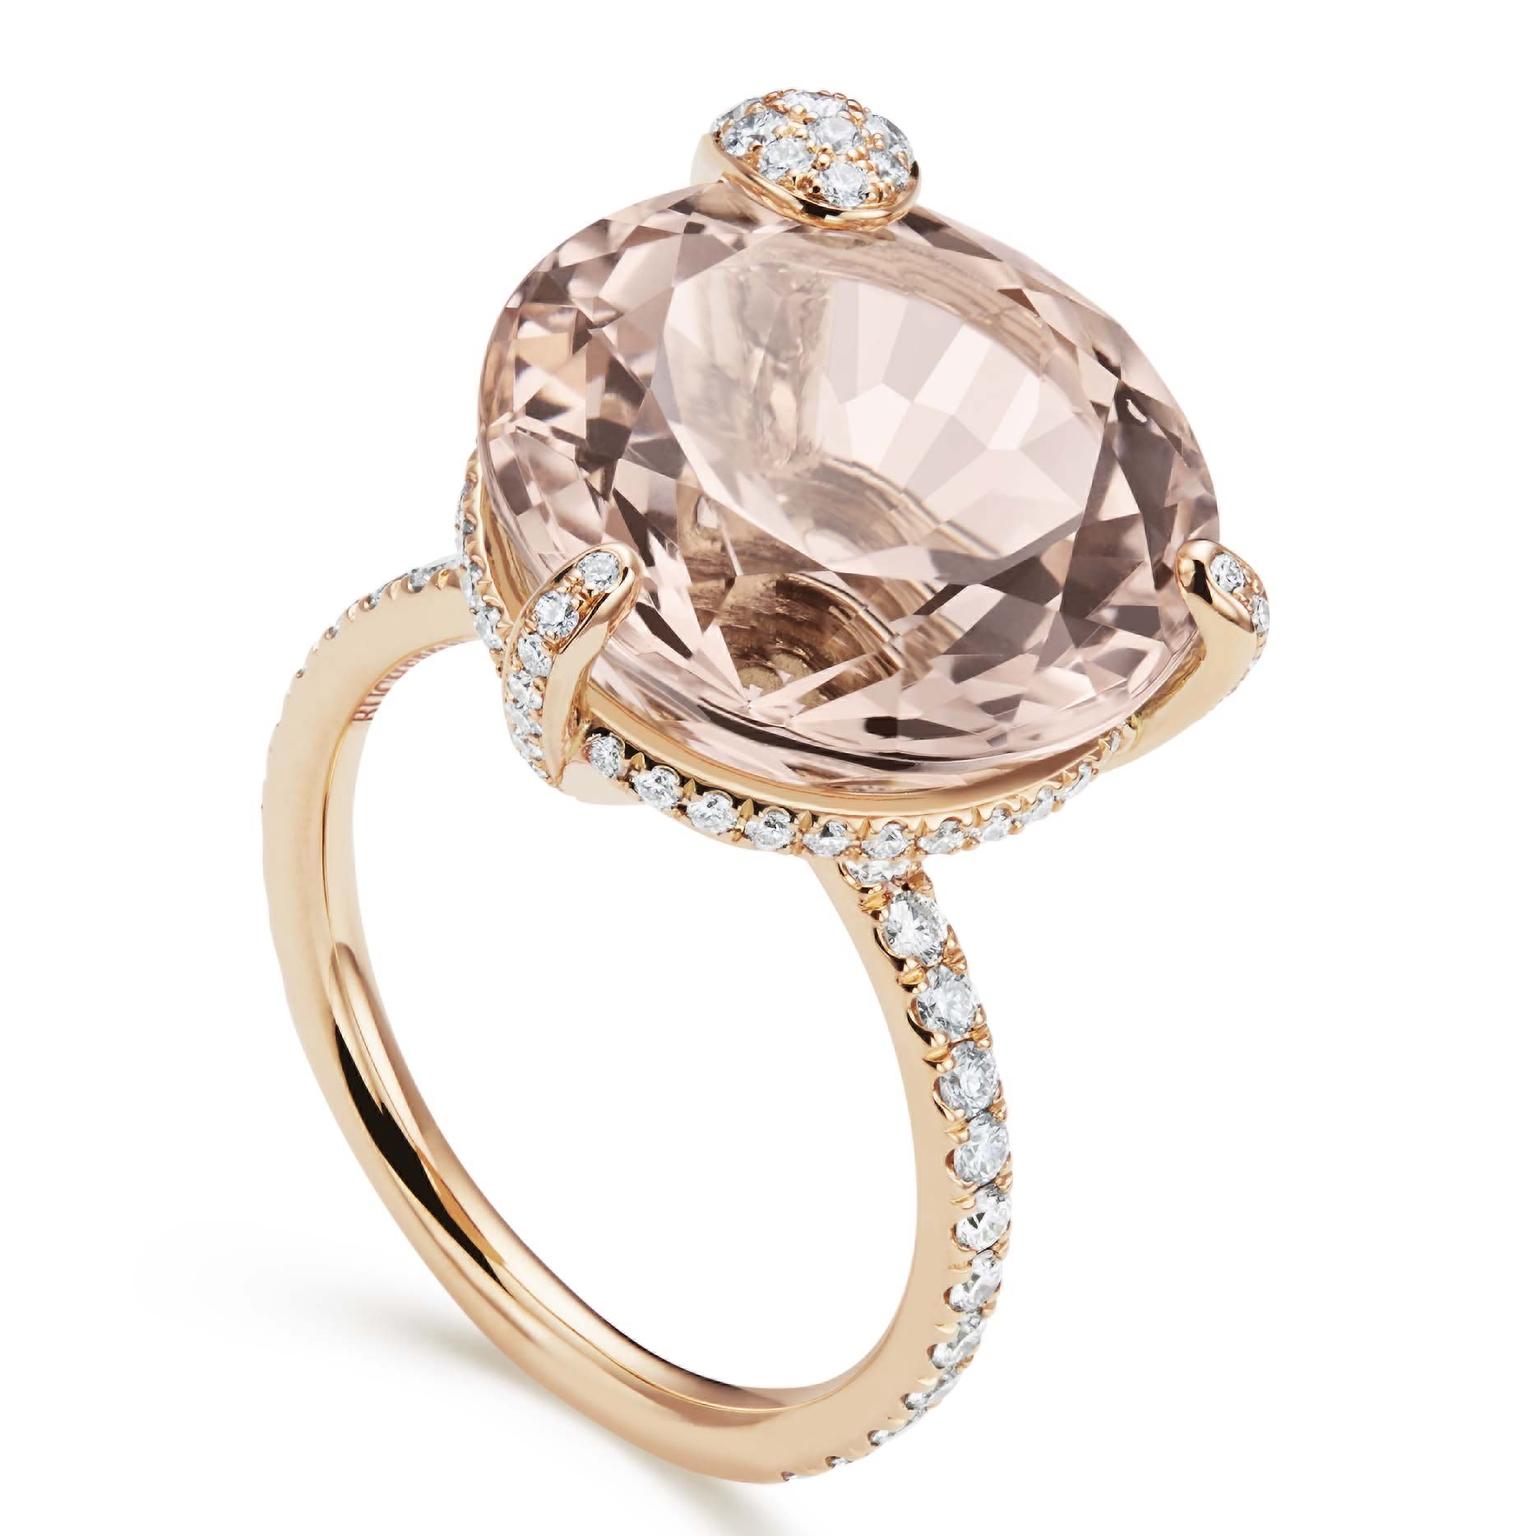 Peekaboo engagement ring from Bucherer with morganite and diamonds